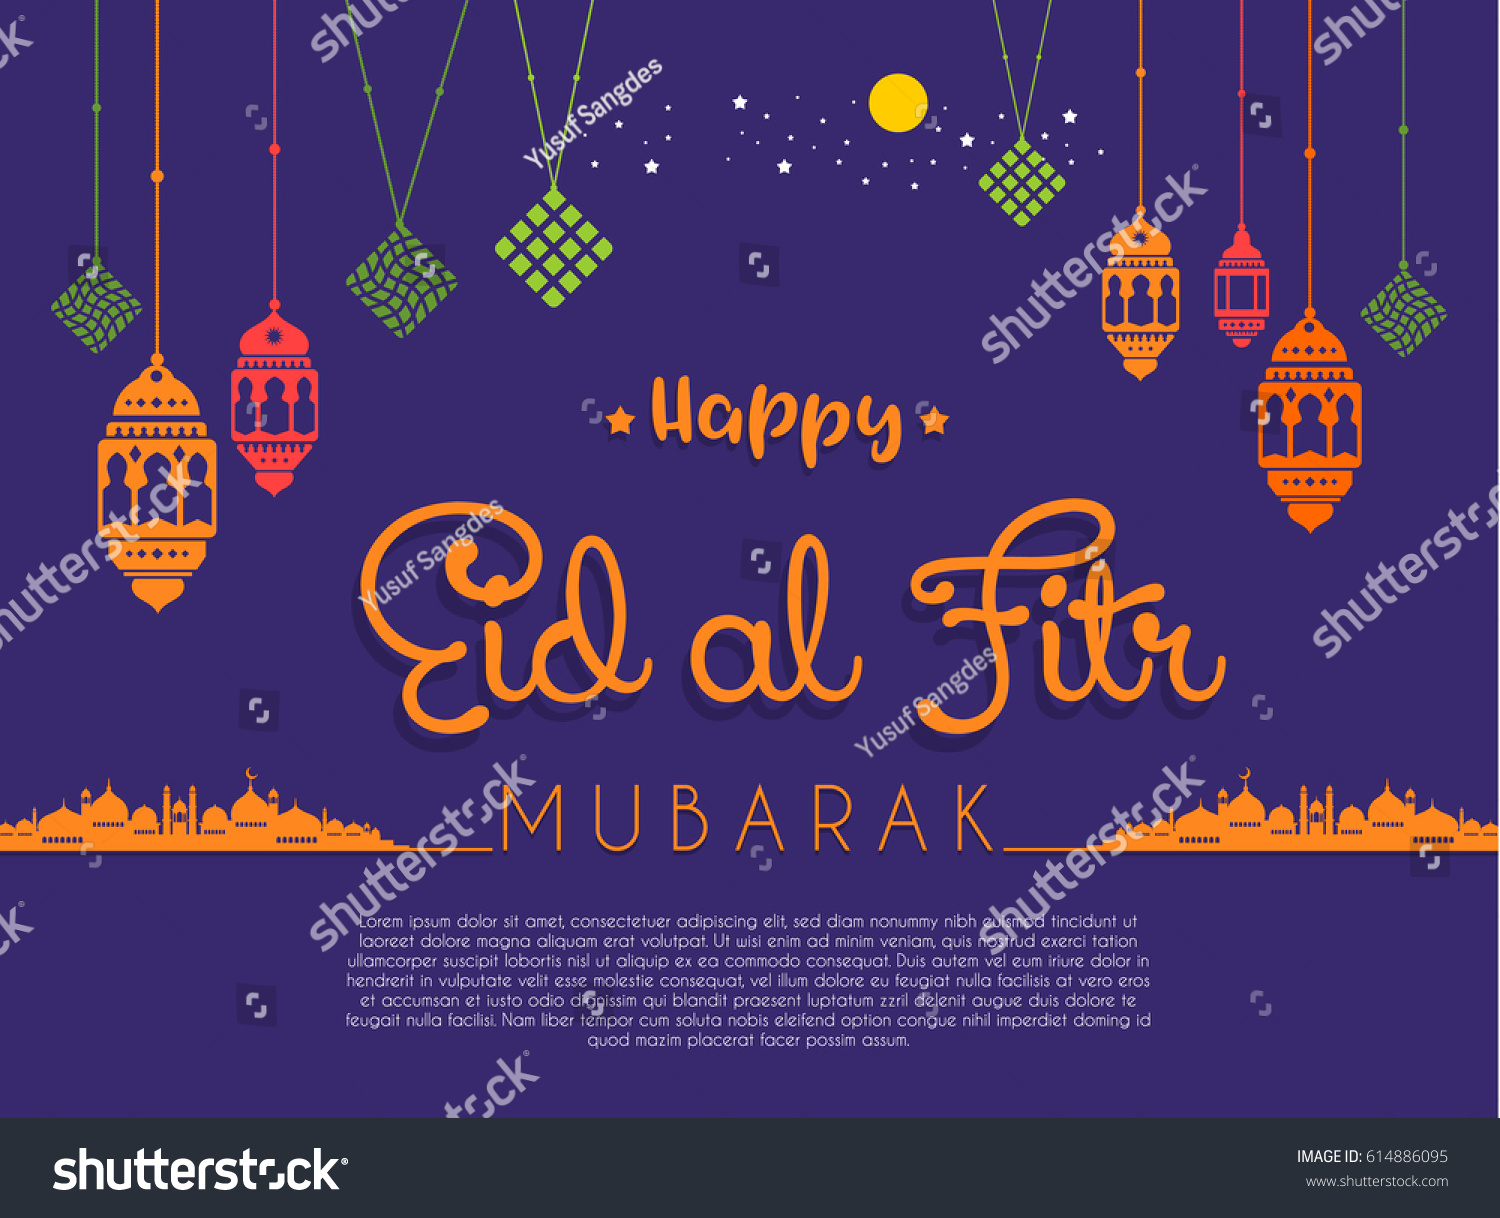 Eid Al Fitr 2021 Calculation / When is Eid alFitr 2021 UK? How many